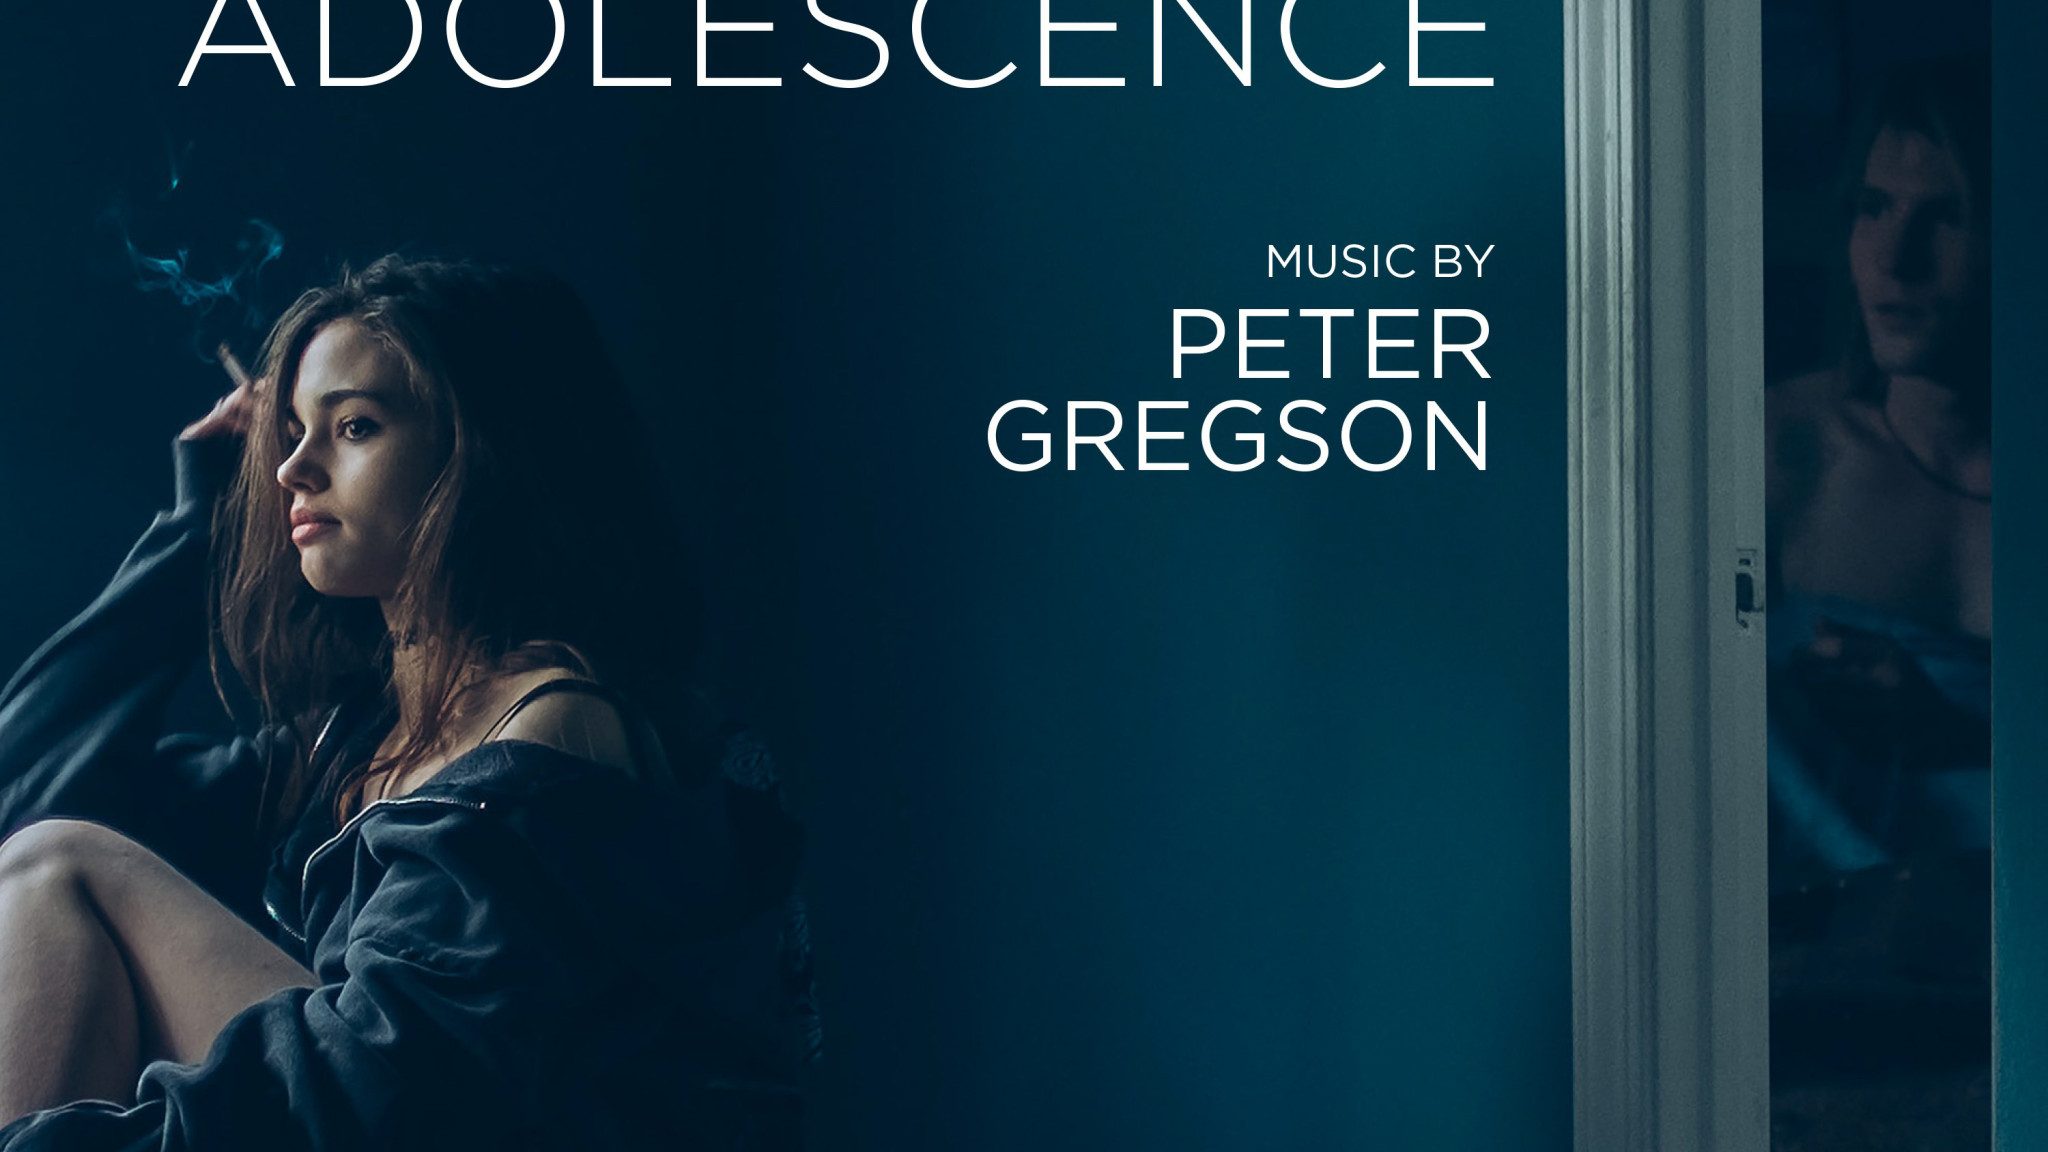 Peter Gregson Adolescence